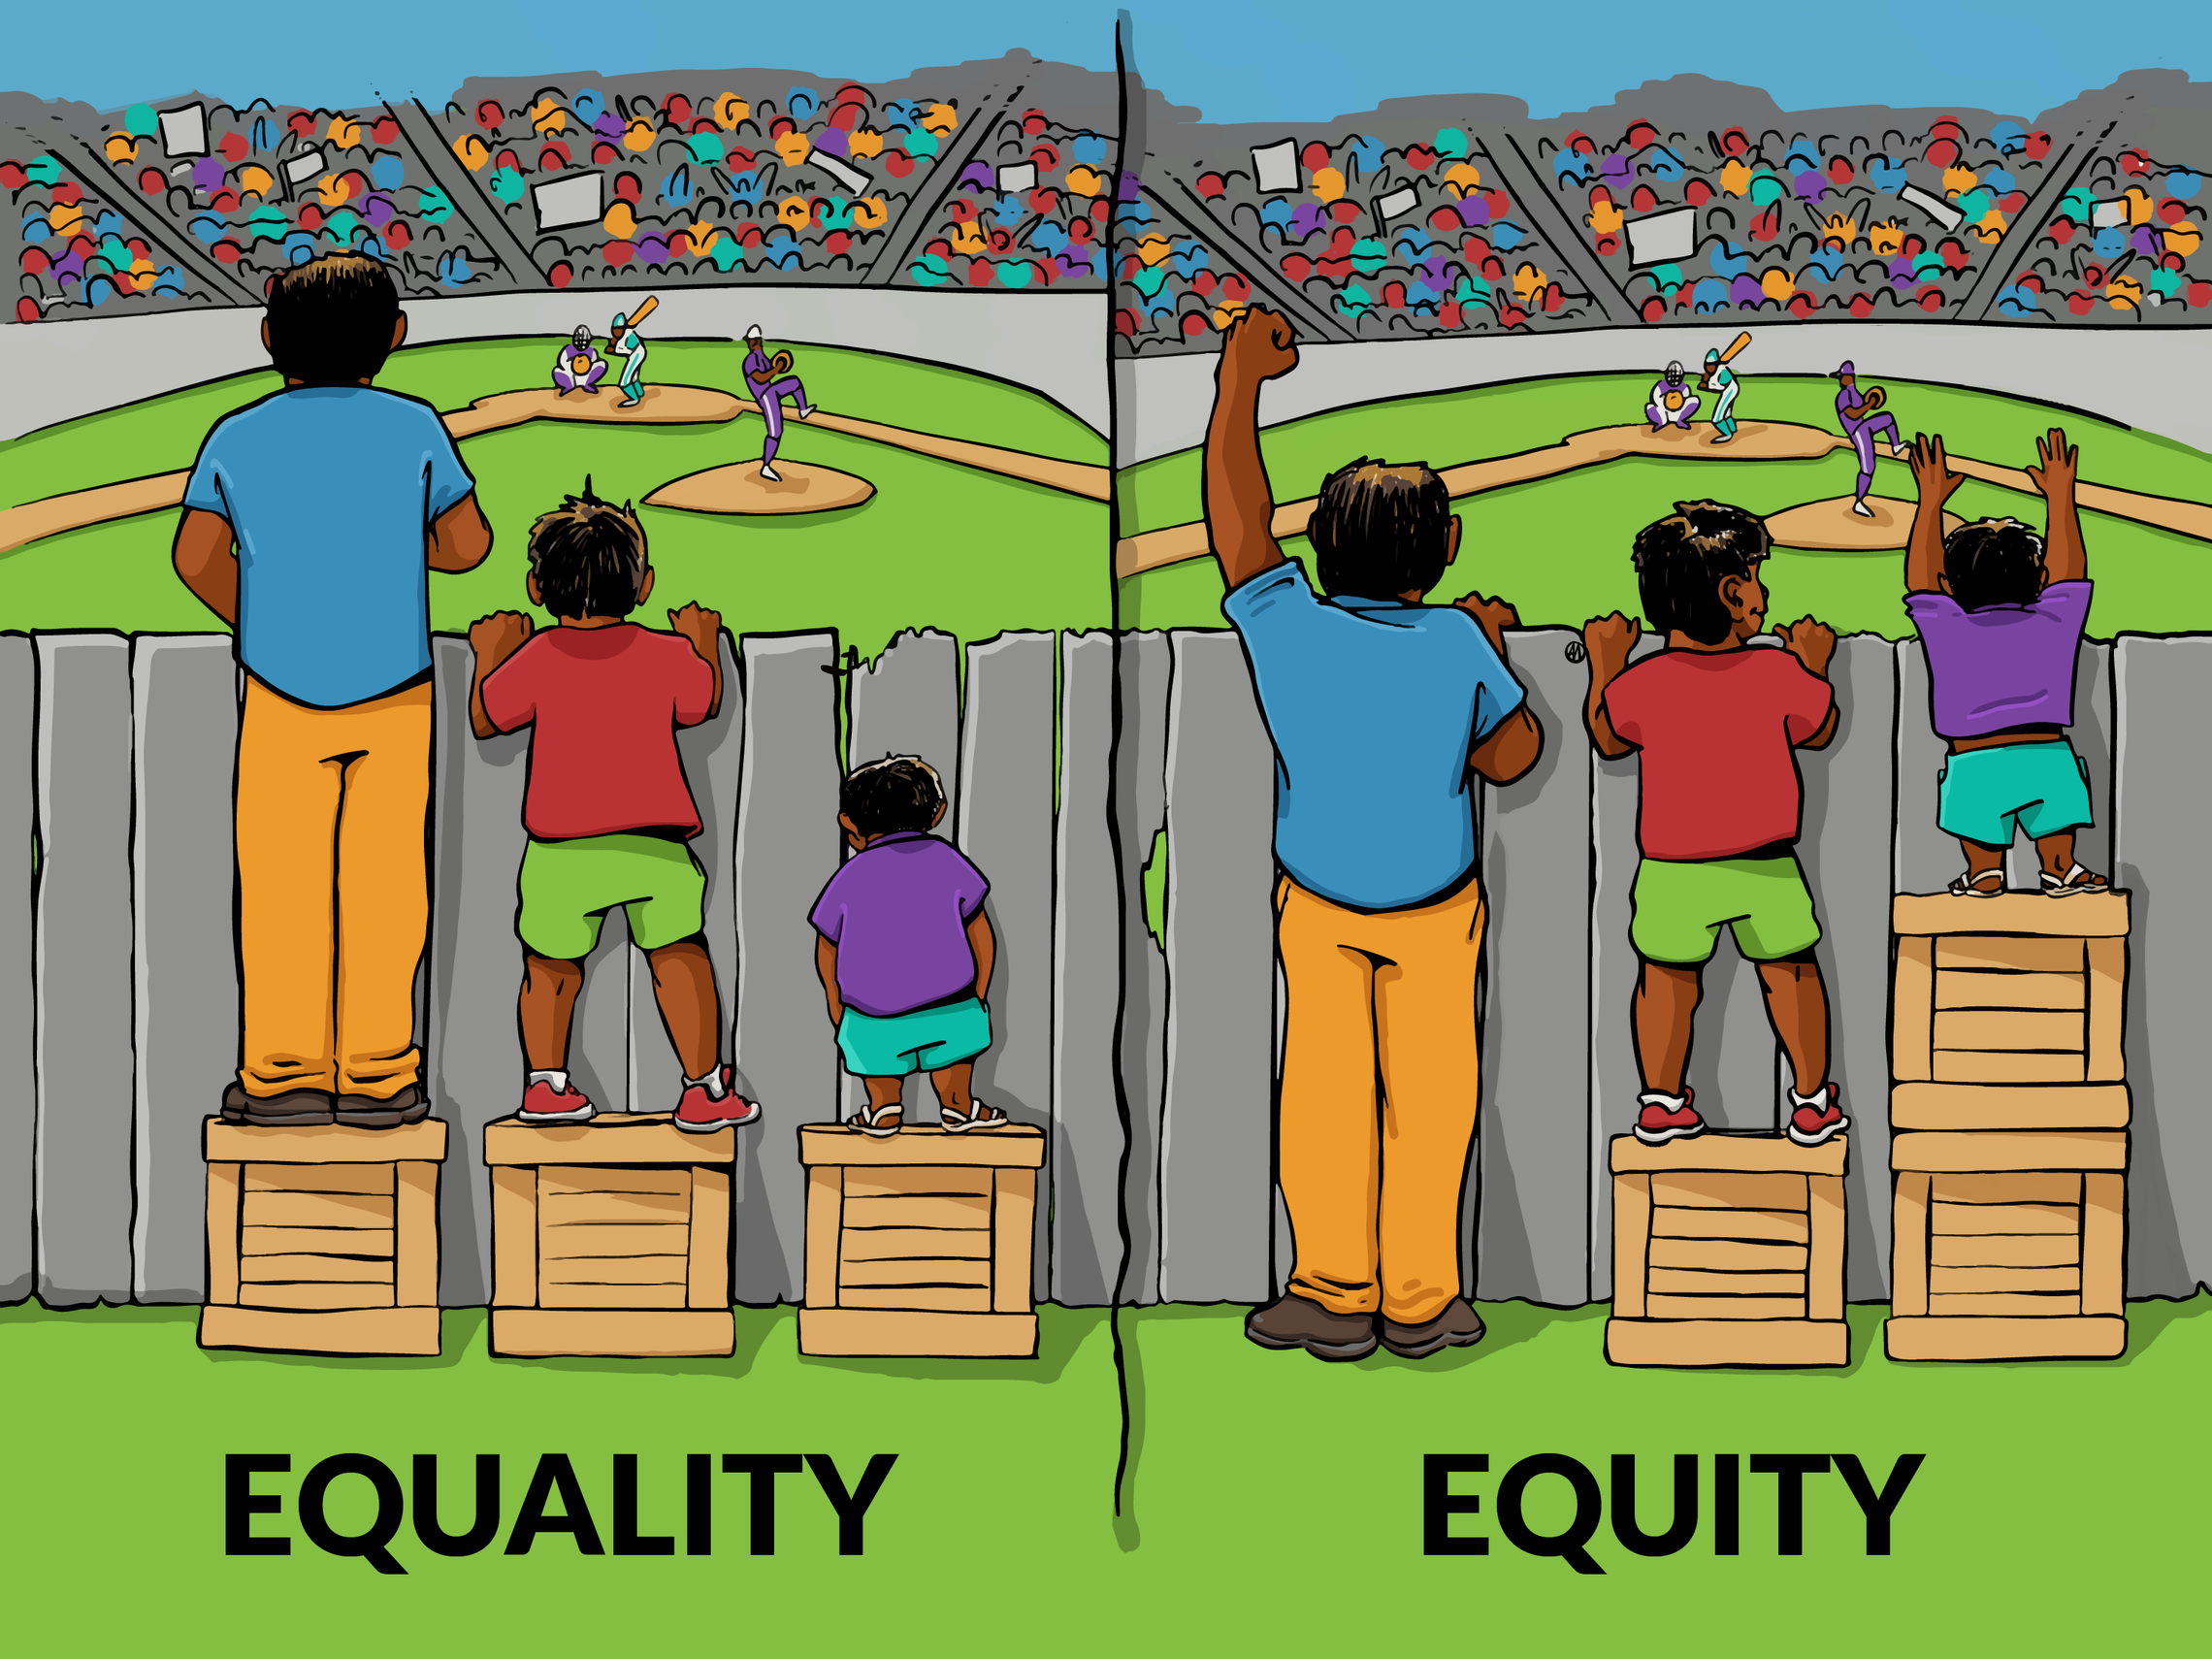 equality vs. equity image.